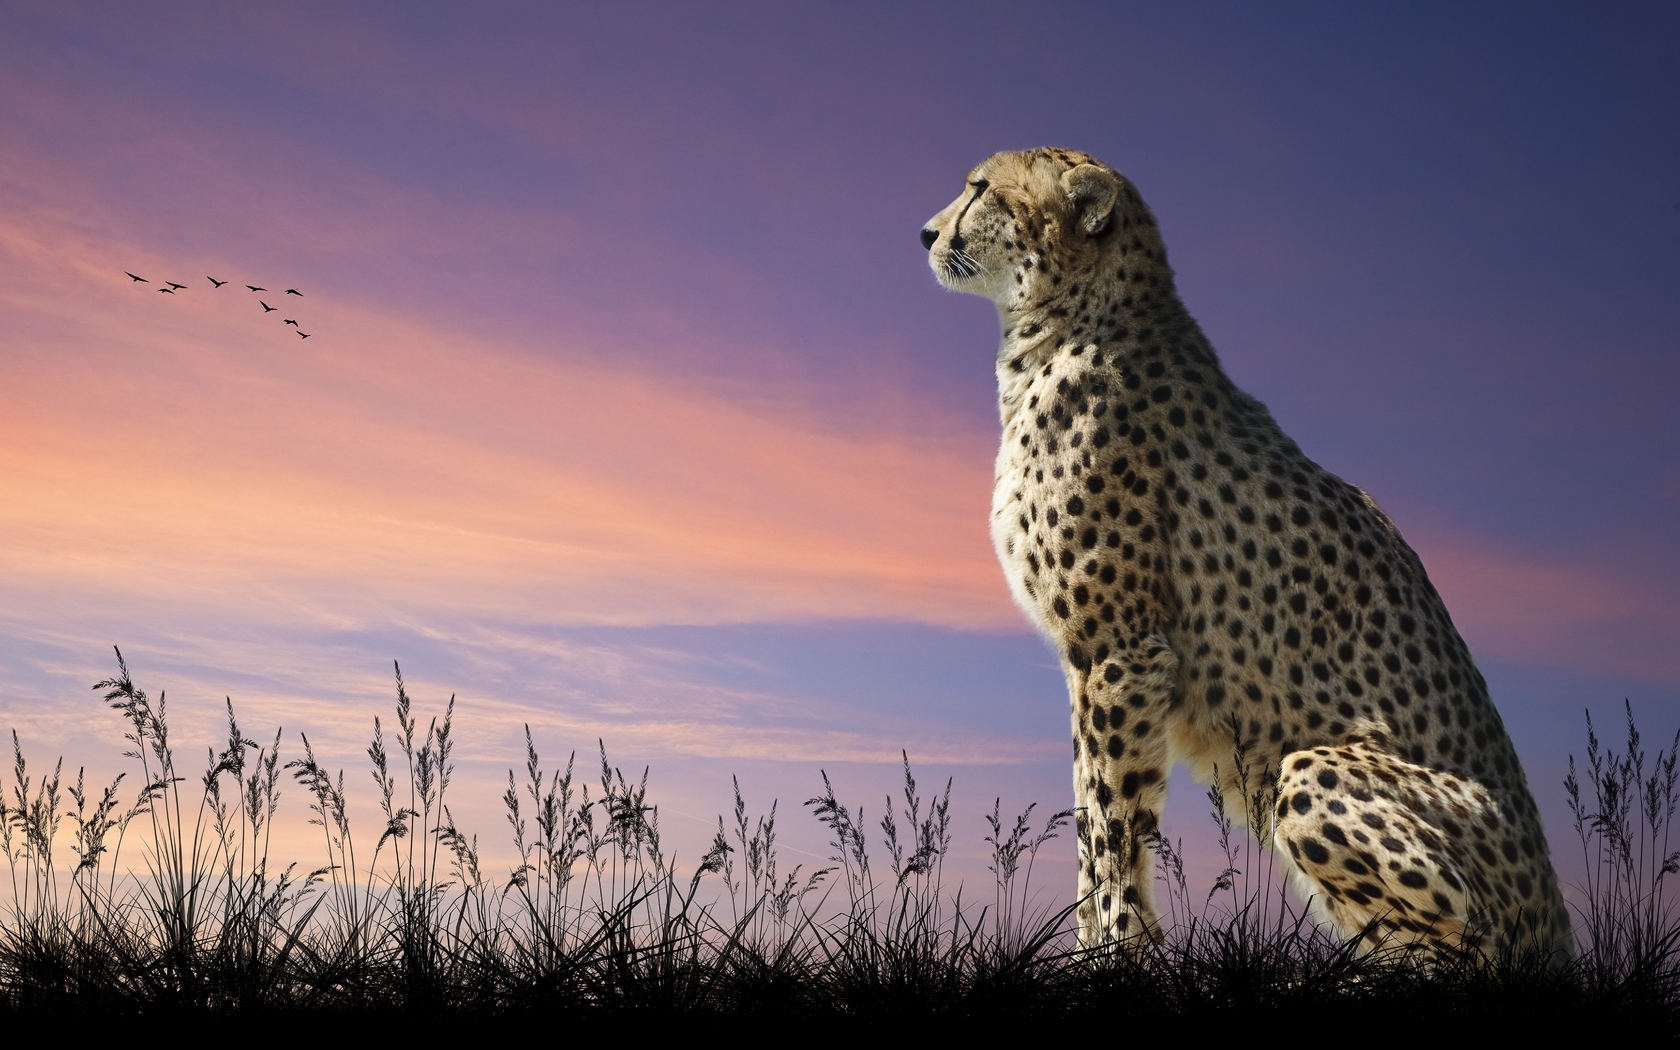 Image: Cheetah, cat, spot, predator, look, evening, sky, nature